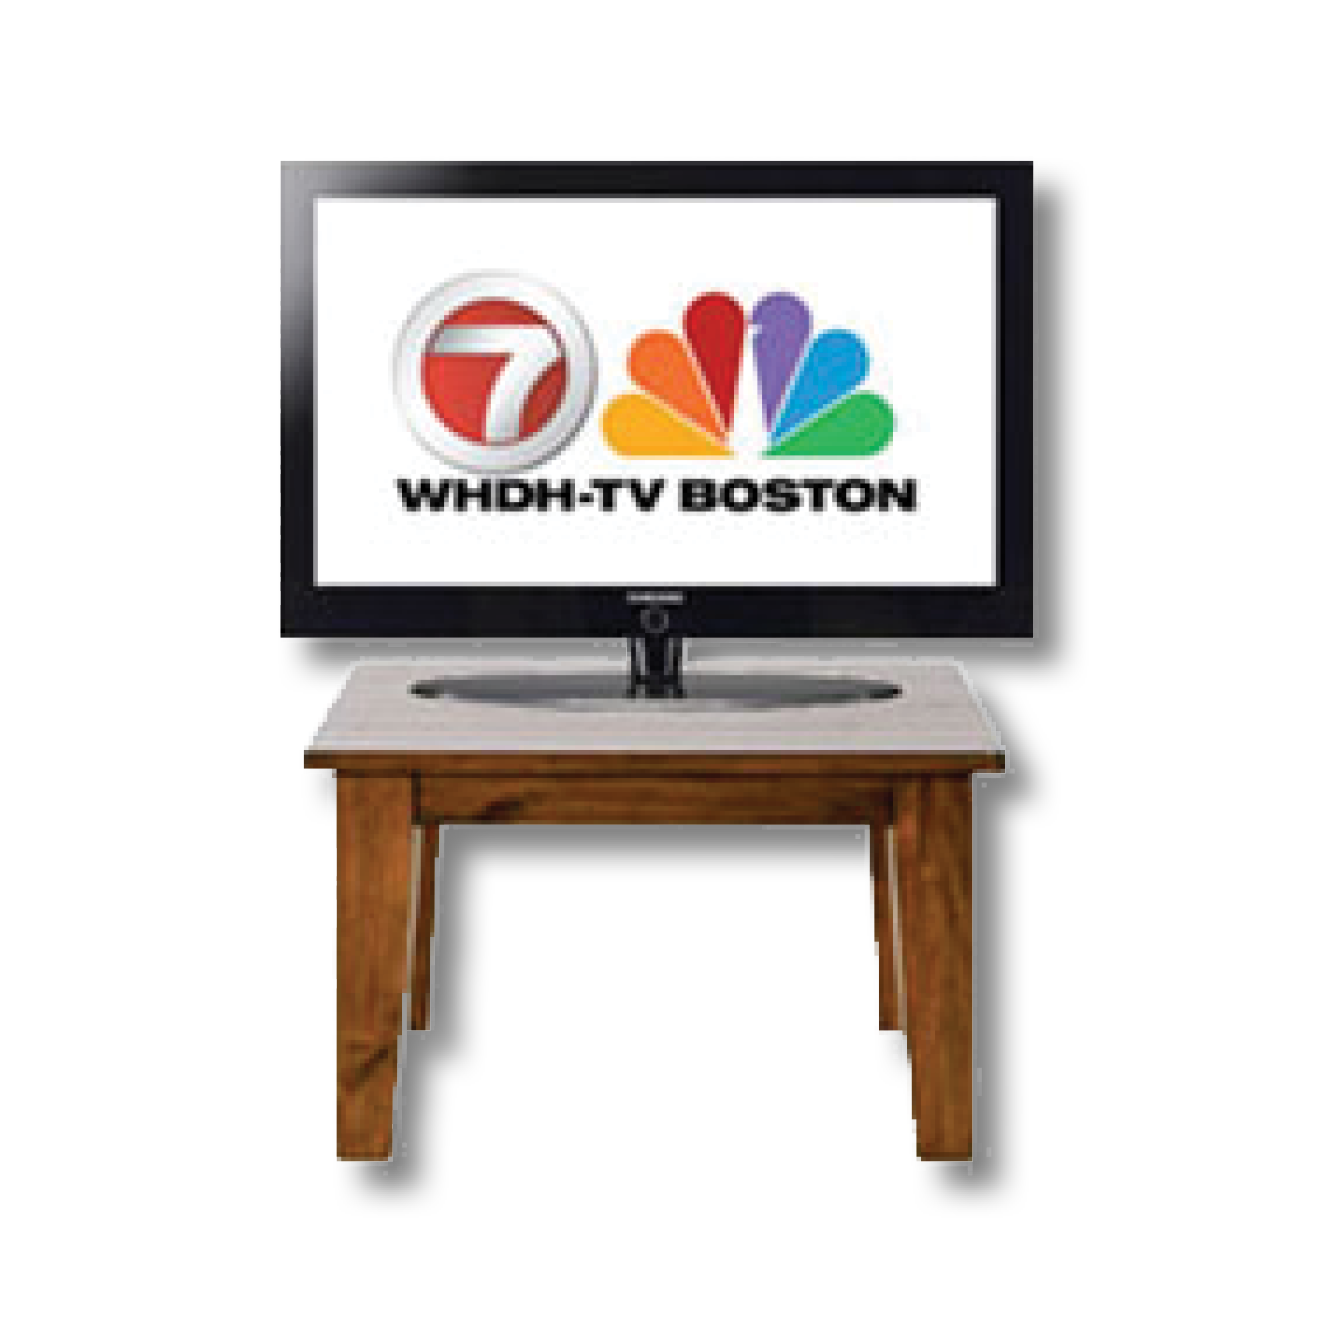 WHDH NBC Boston - final